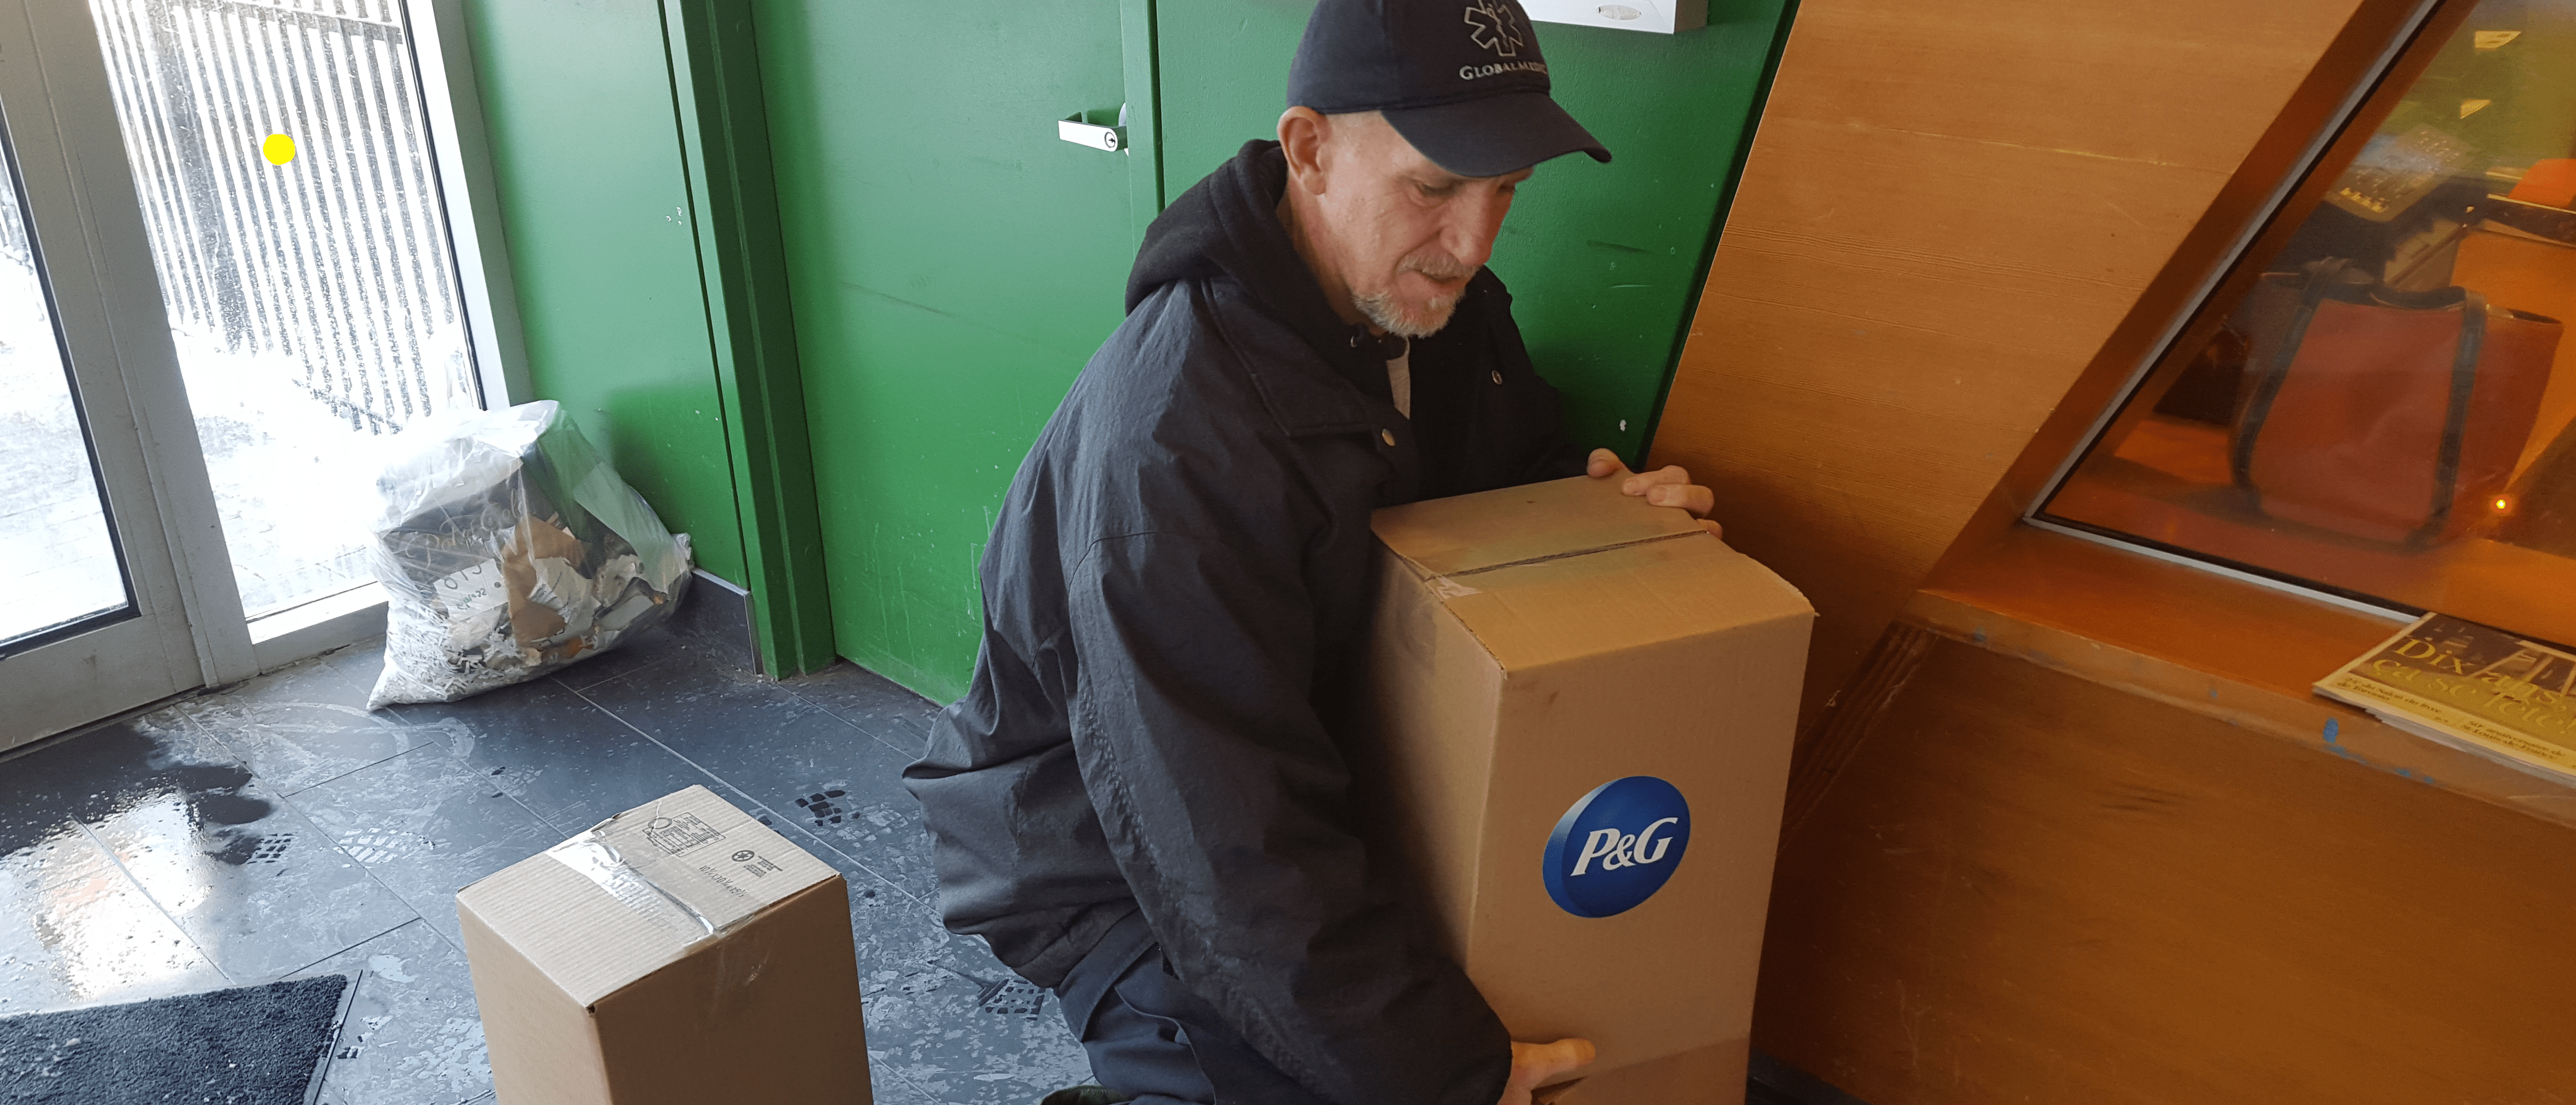 GlobalMedic volunteer delivering a box of hygiene kits